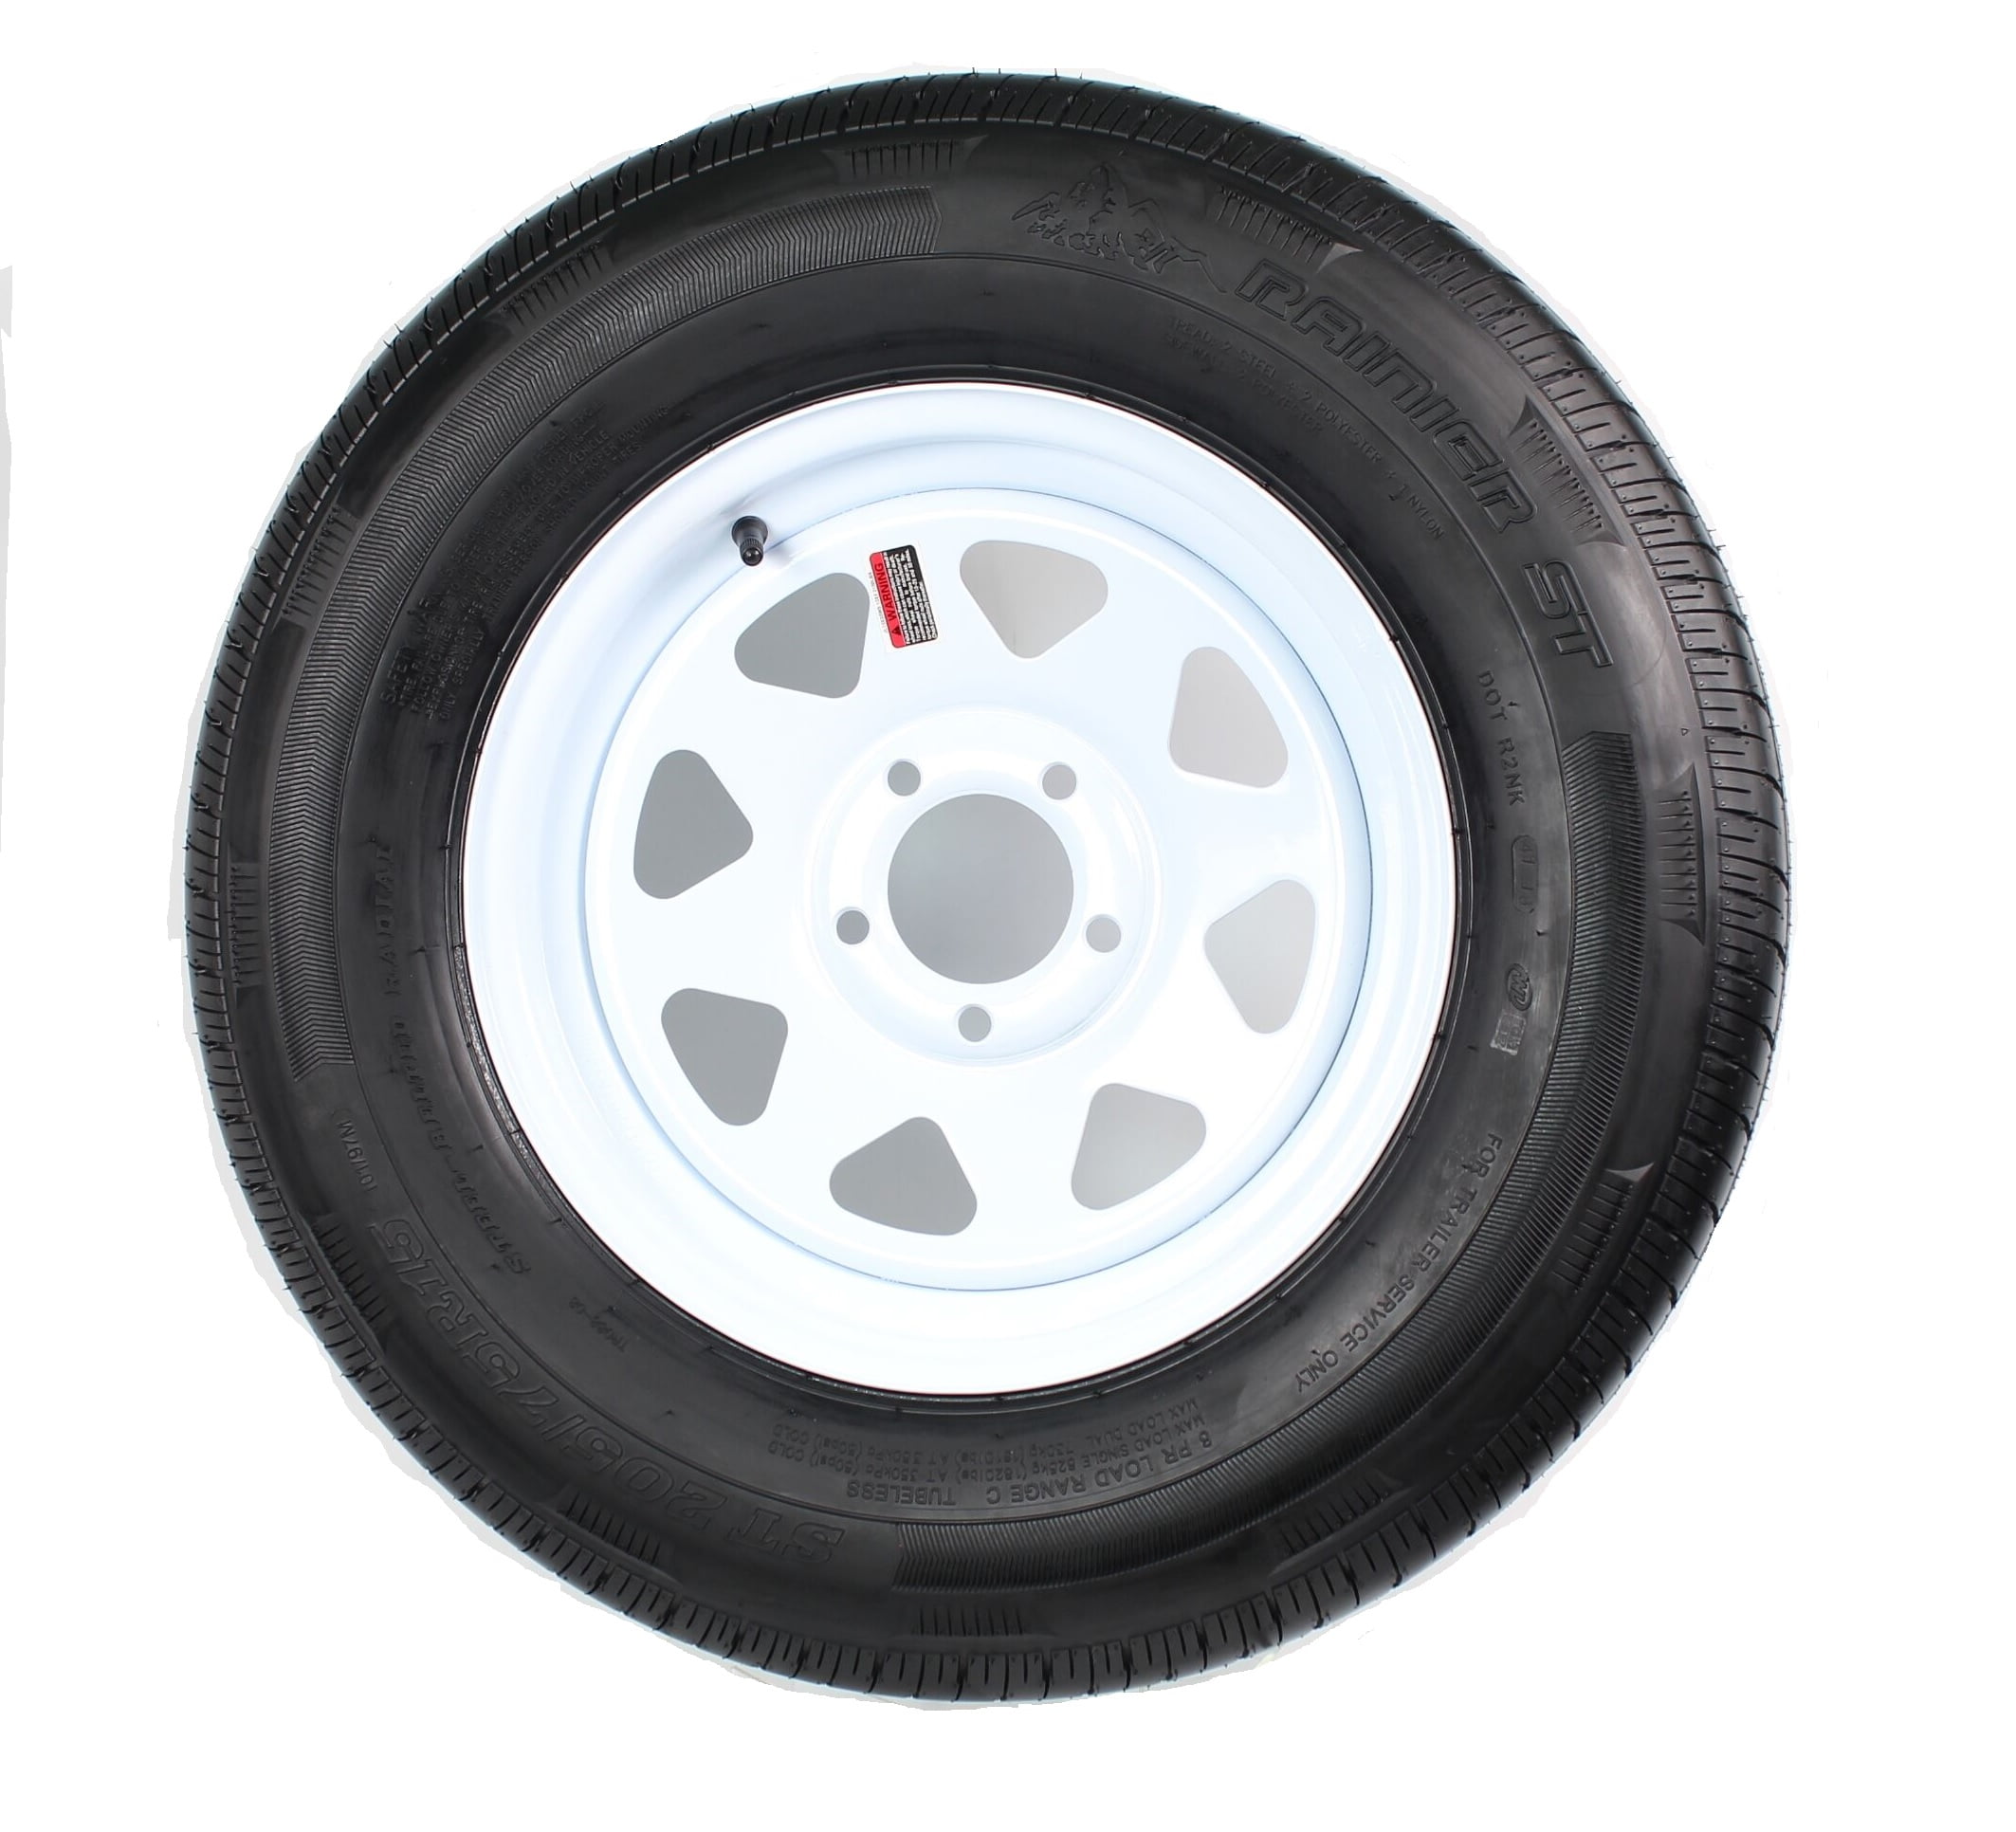 5-5 bolt circle 15 x 5 Silver Modular Trailer Wheel with bias AllStar ST20575D15C Tire Mounted 